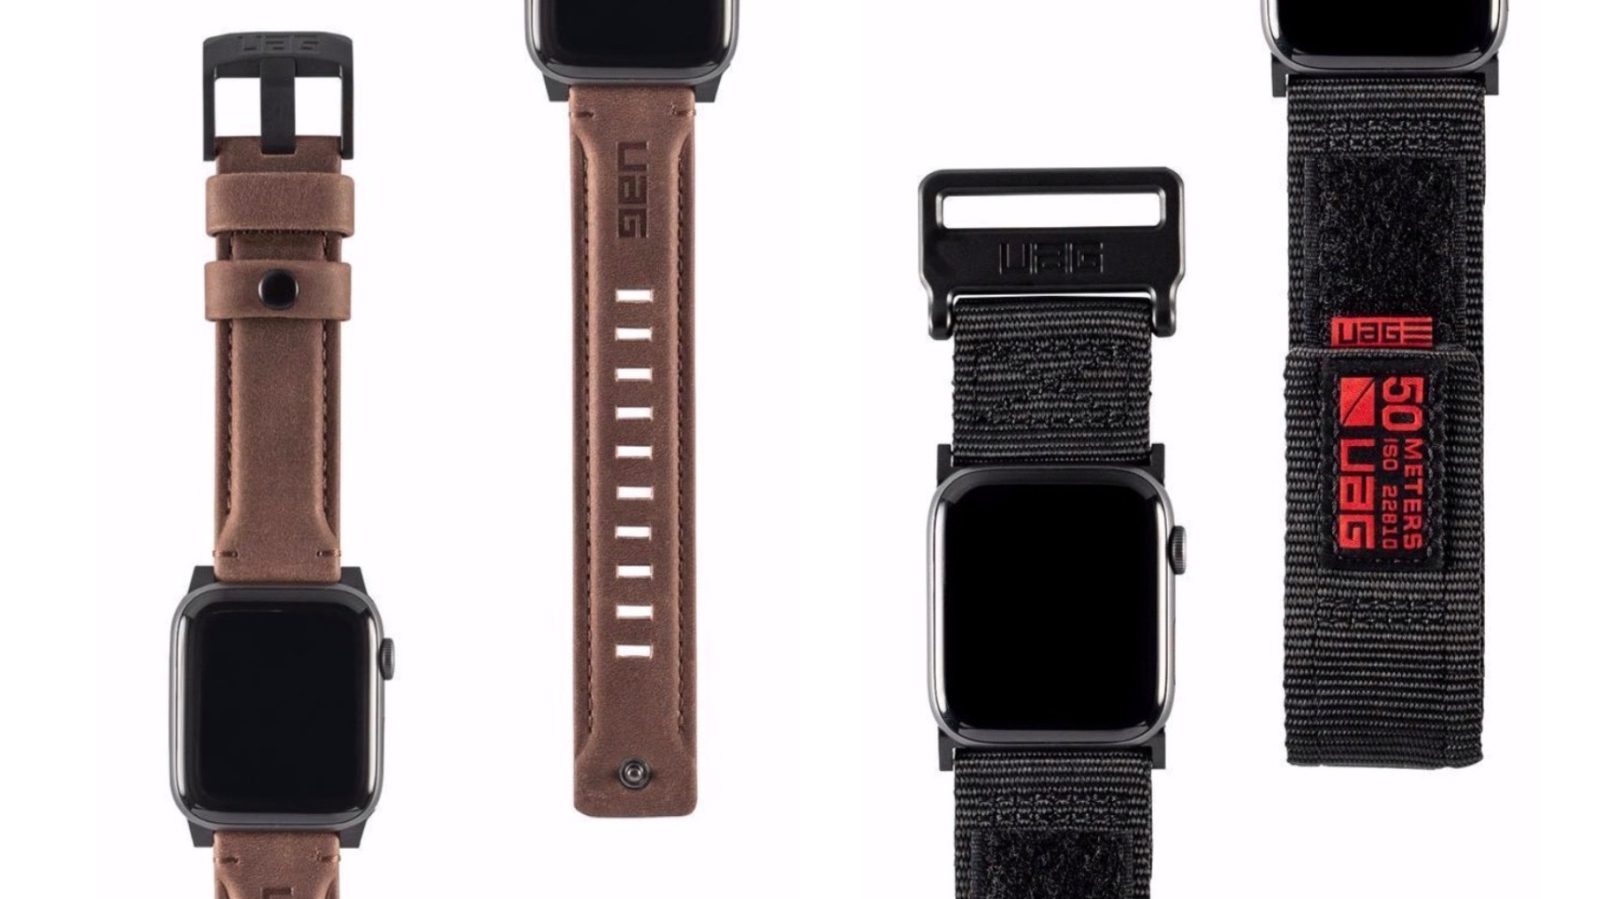 Rugged Apple Watch straps